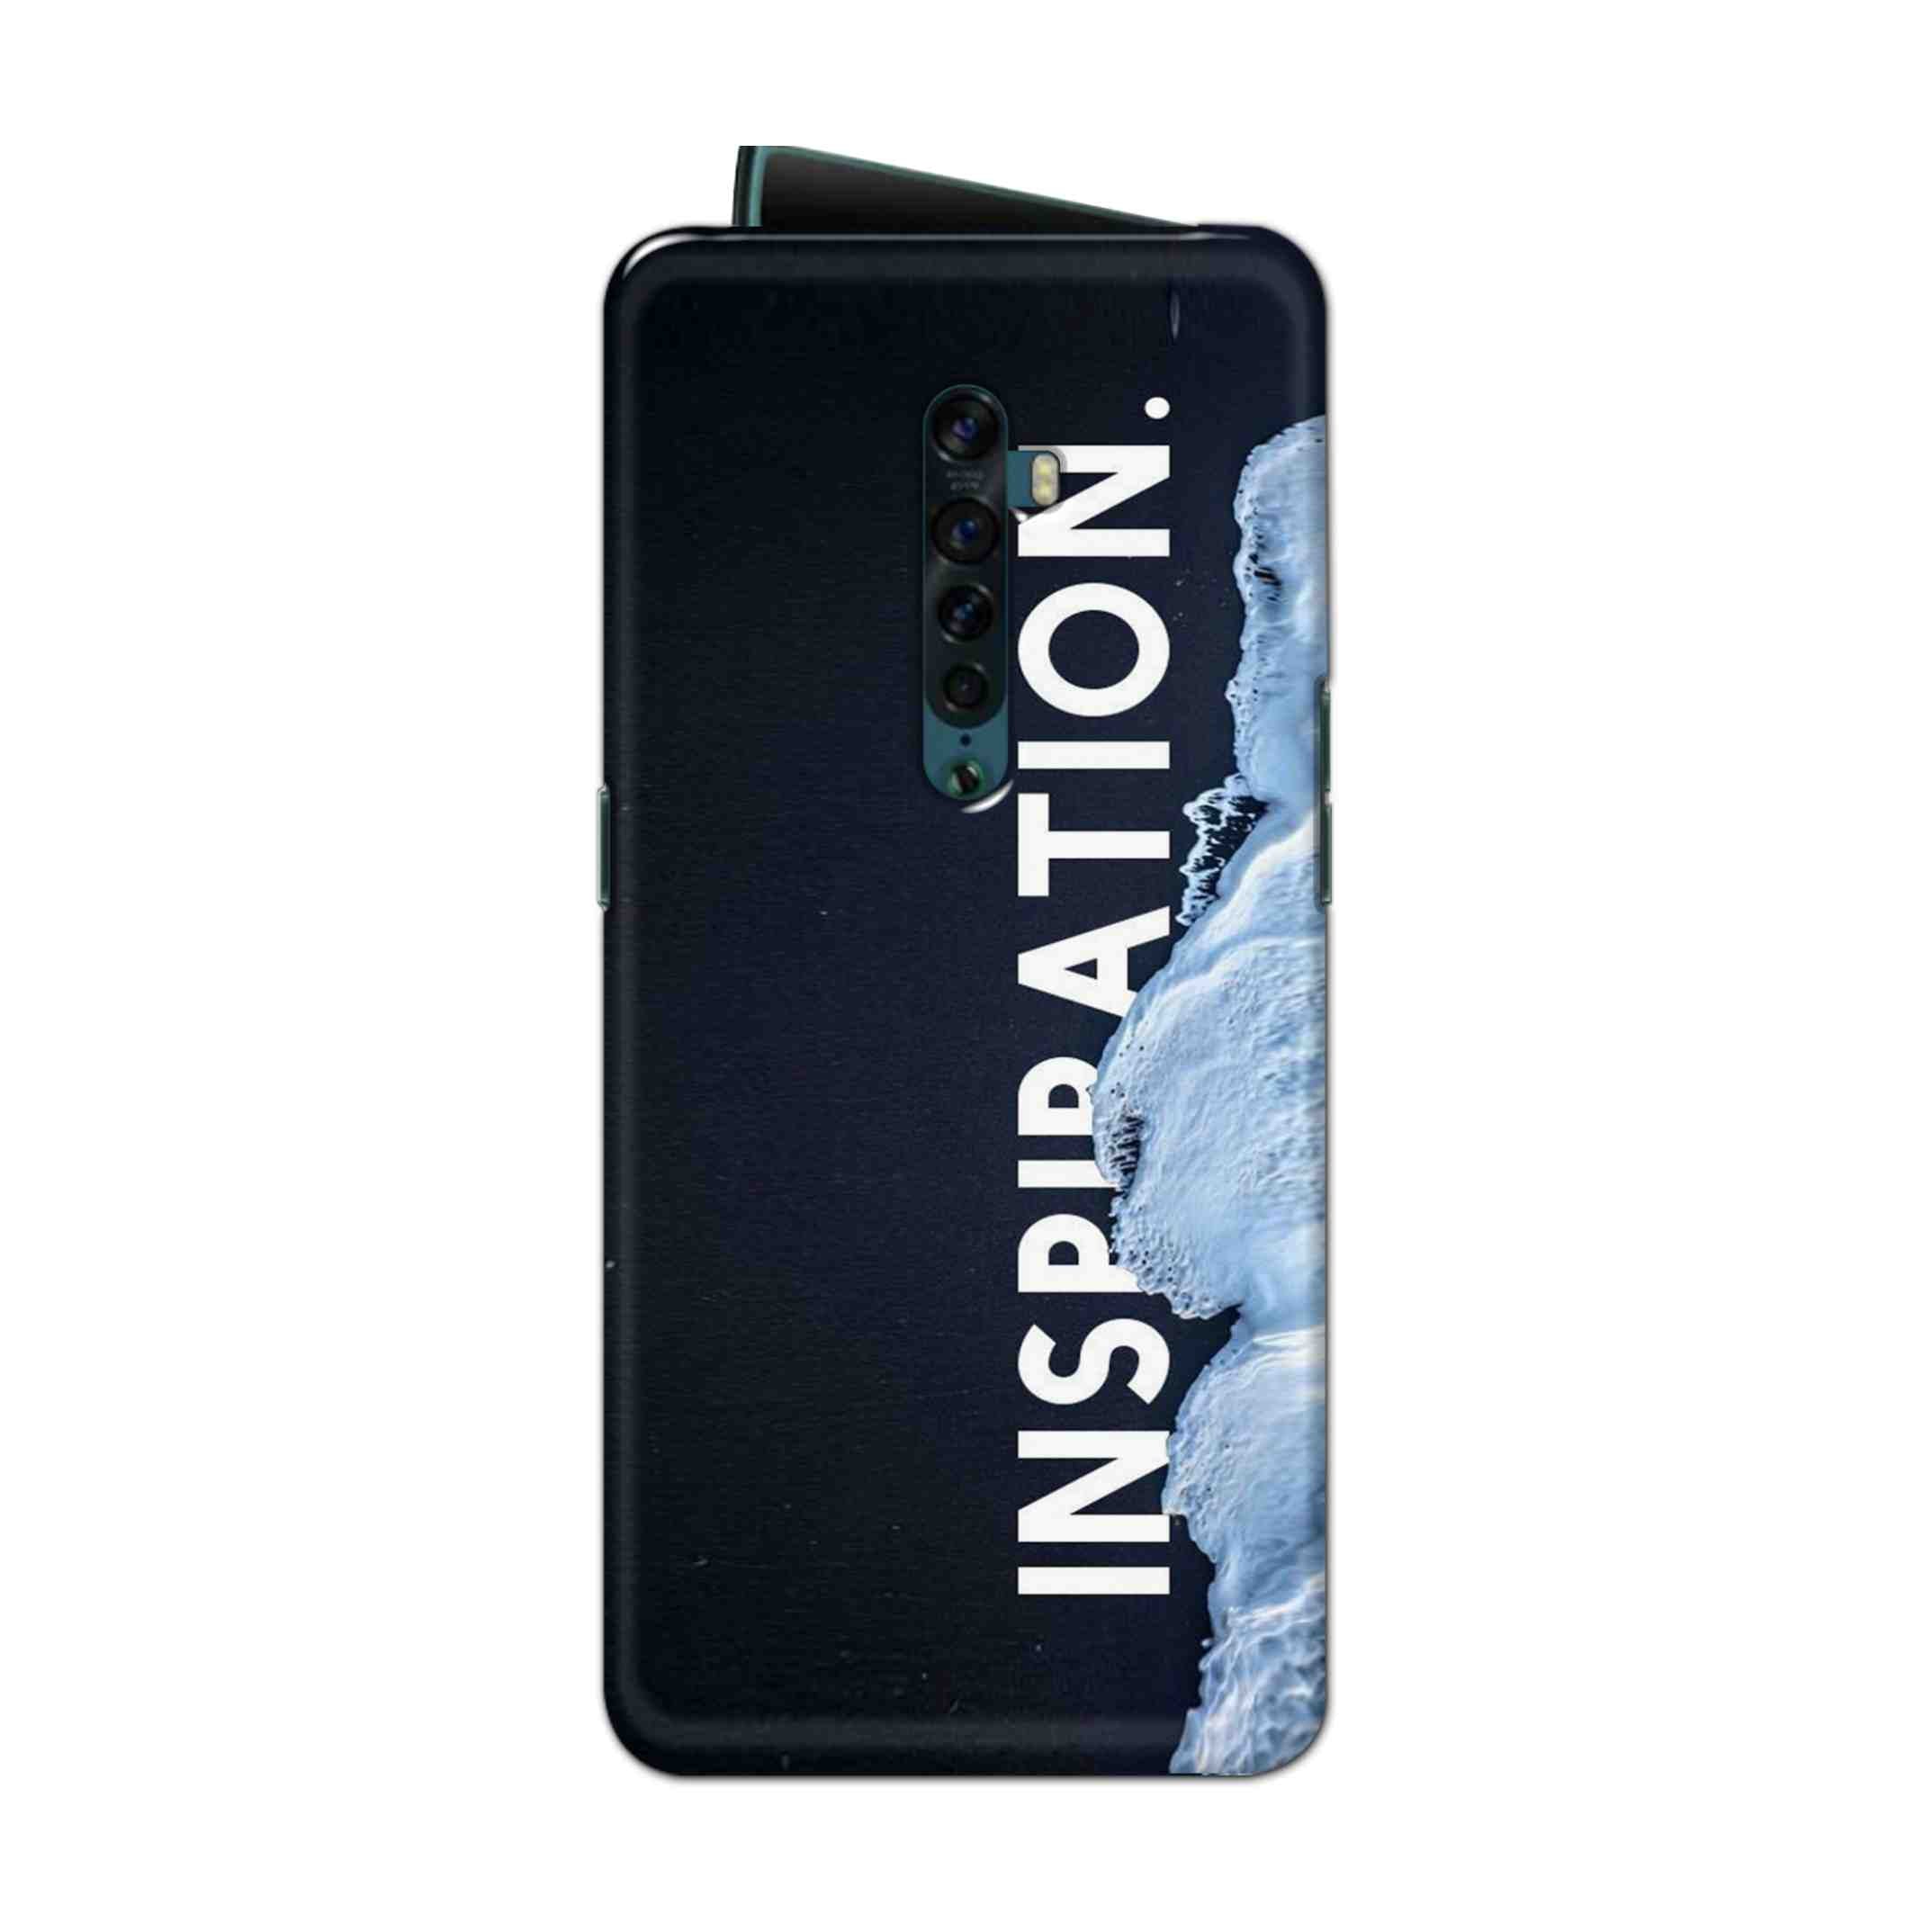 Buy Inspiration Hard Back Mobile Phone Case Cover For Oppo Reno 2 Online